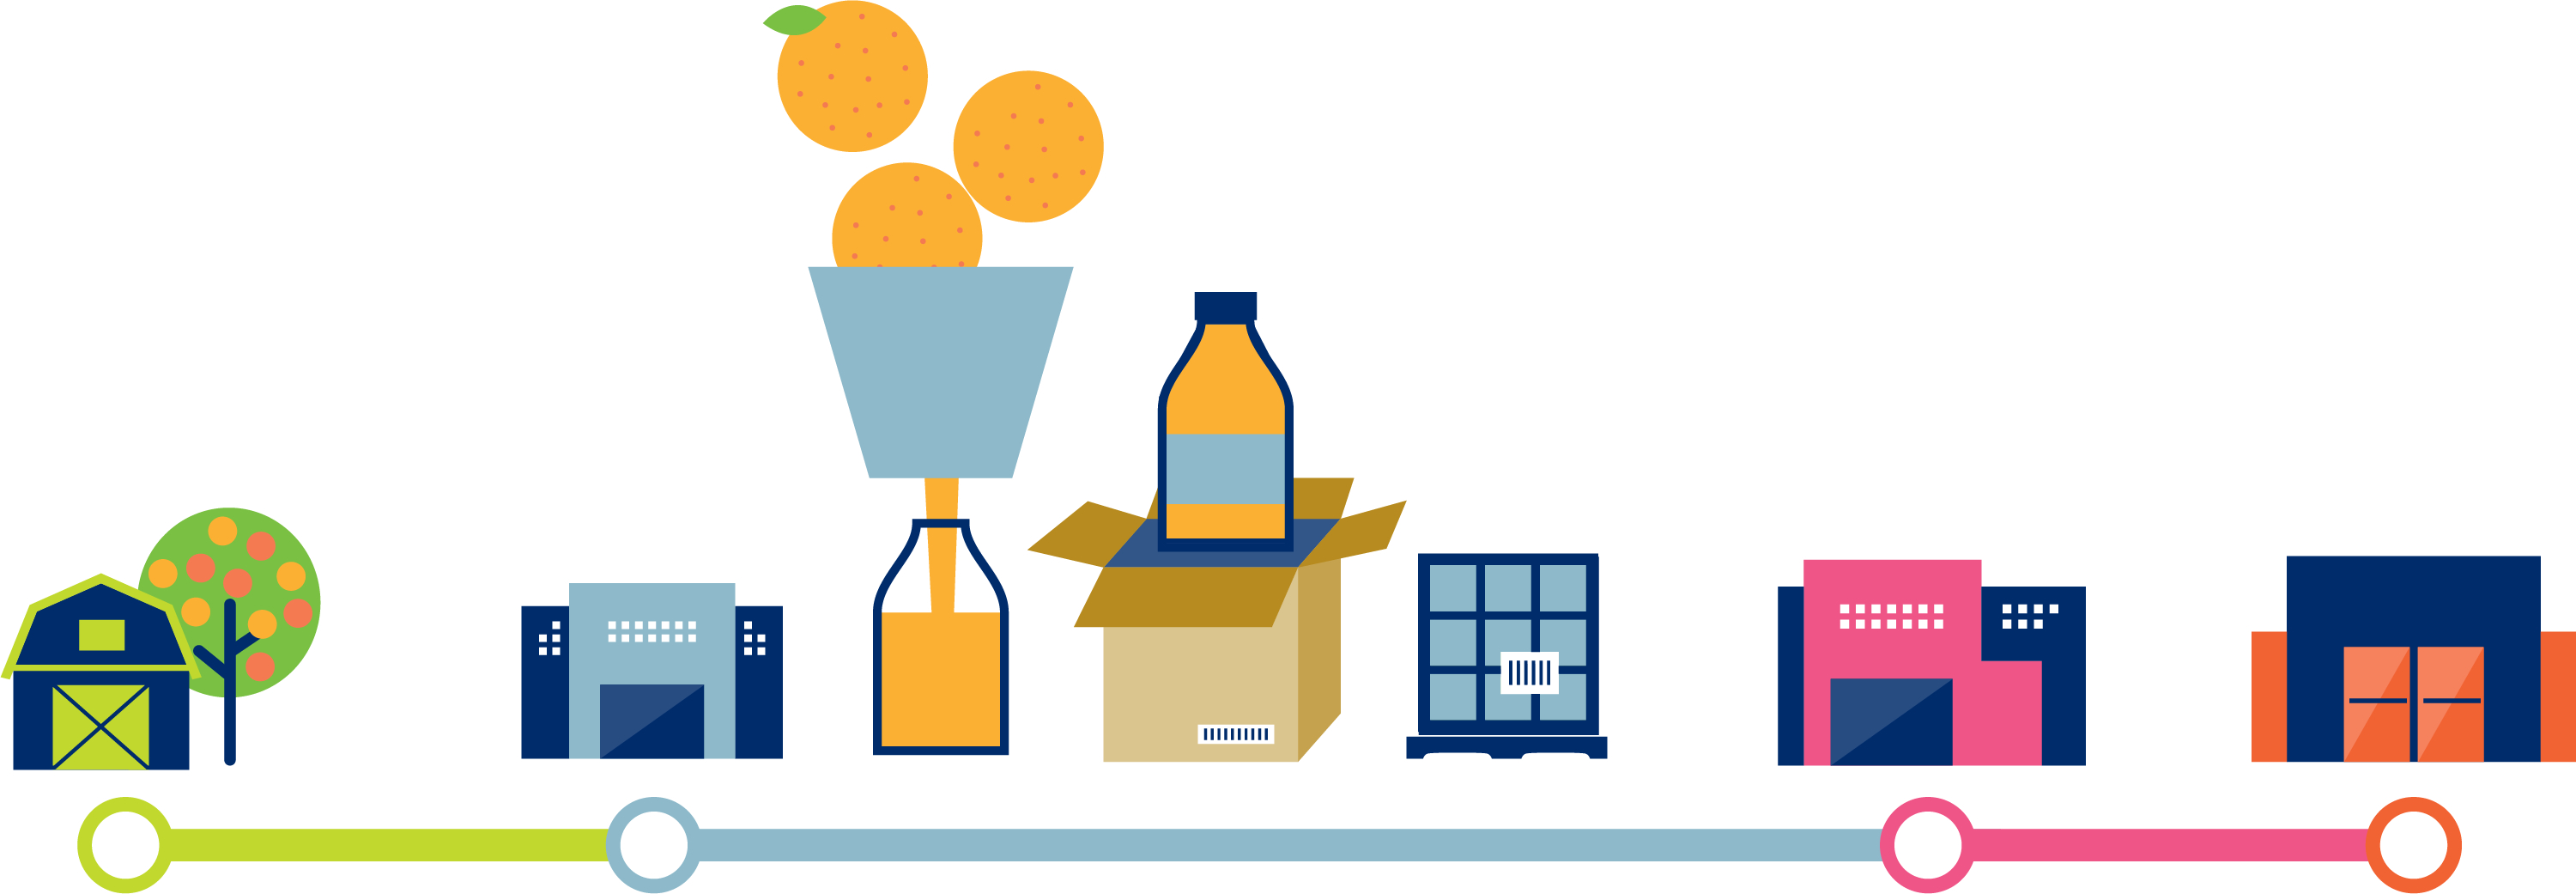 Orange Juice Supply Chain Graphic